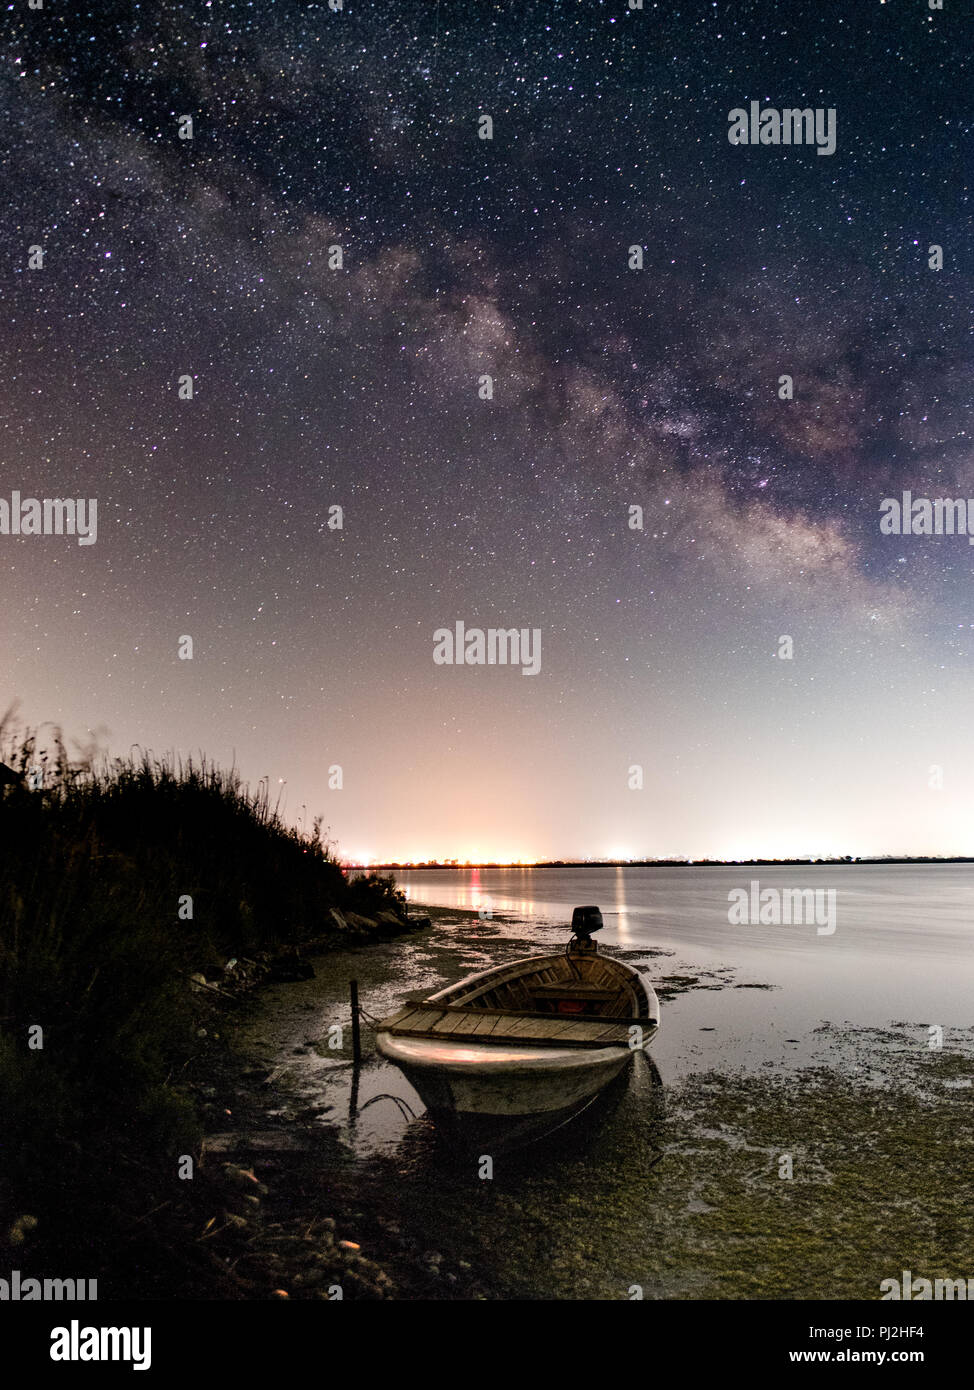 night landscape photography. lake boat and milky way Stock Photo